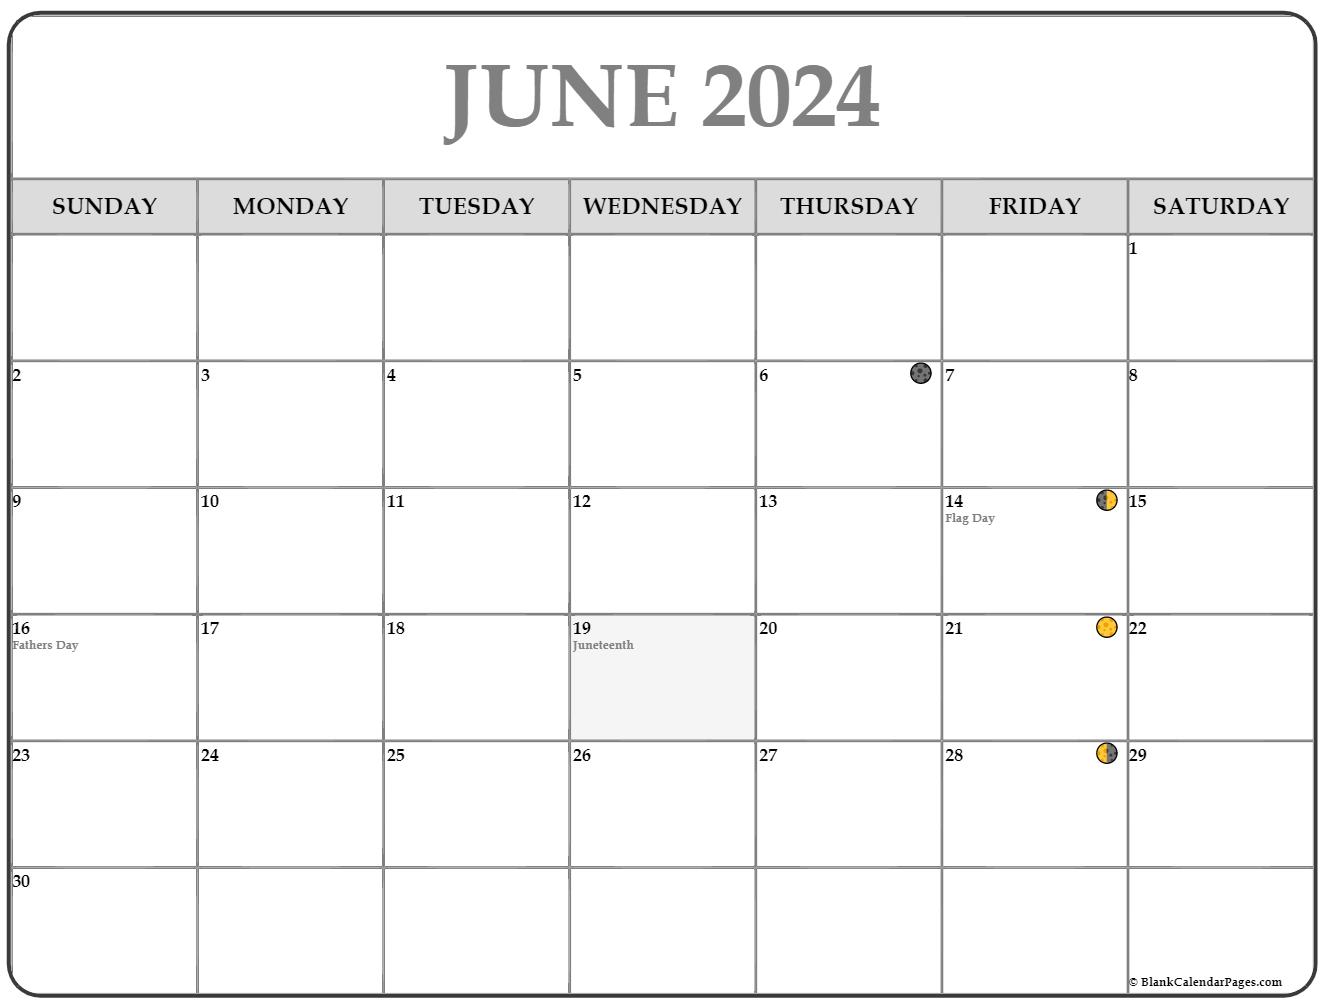 June 2018 calendar | free printable monthly calendars1767 x 1333